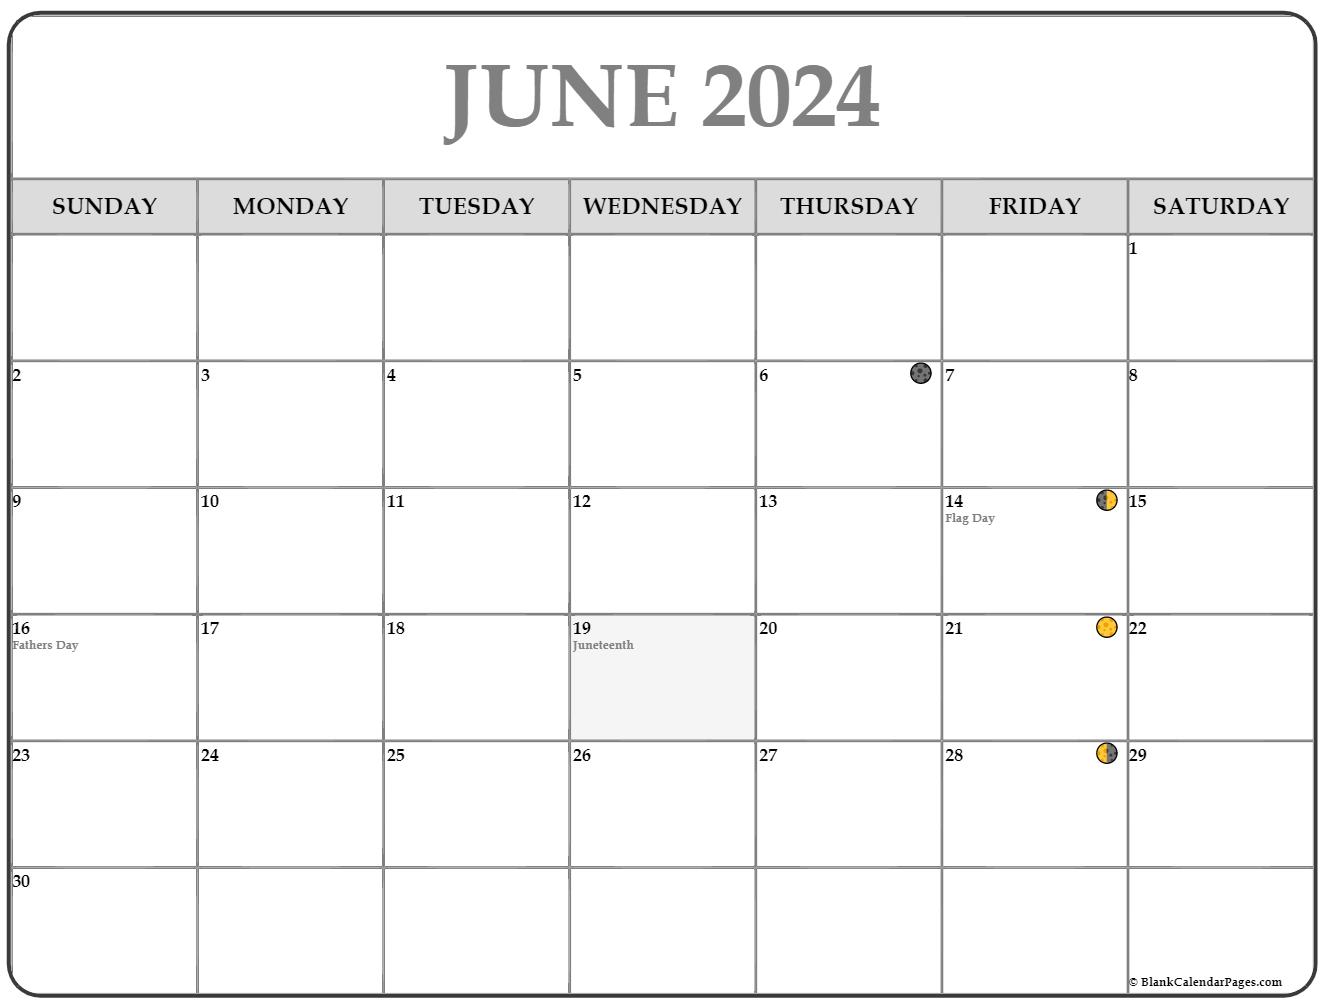 June 2018 calendar | free printable monthly calendars1767 x 1333